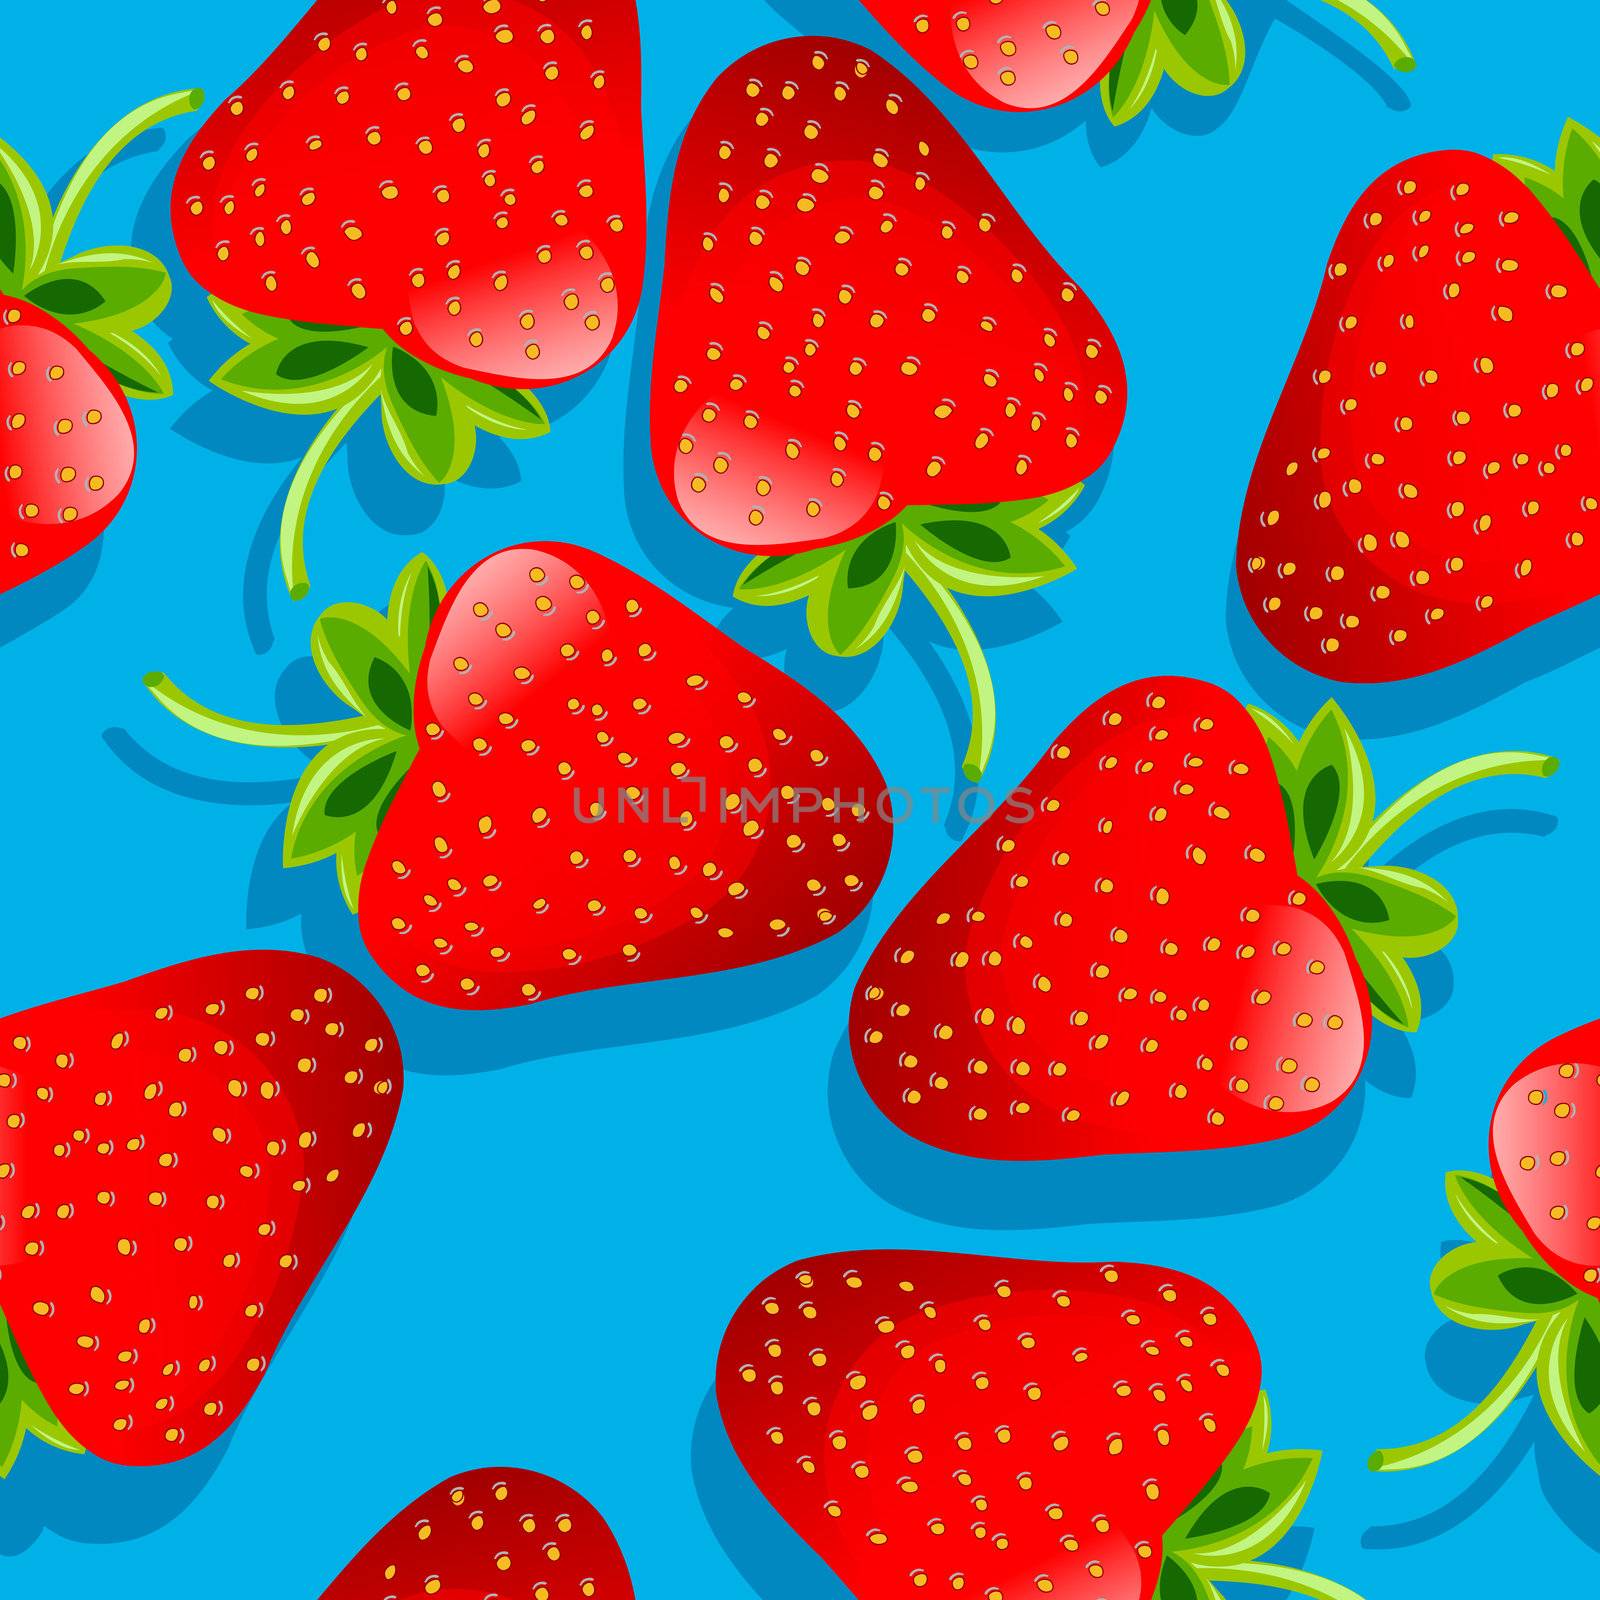 Strawberries pattern by Lirch